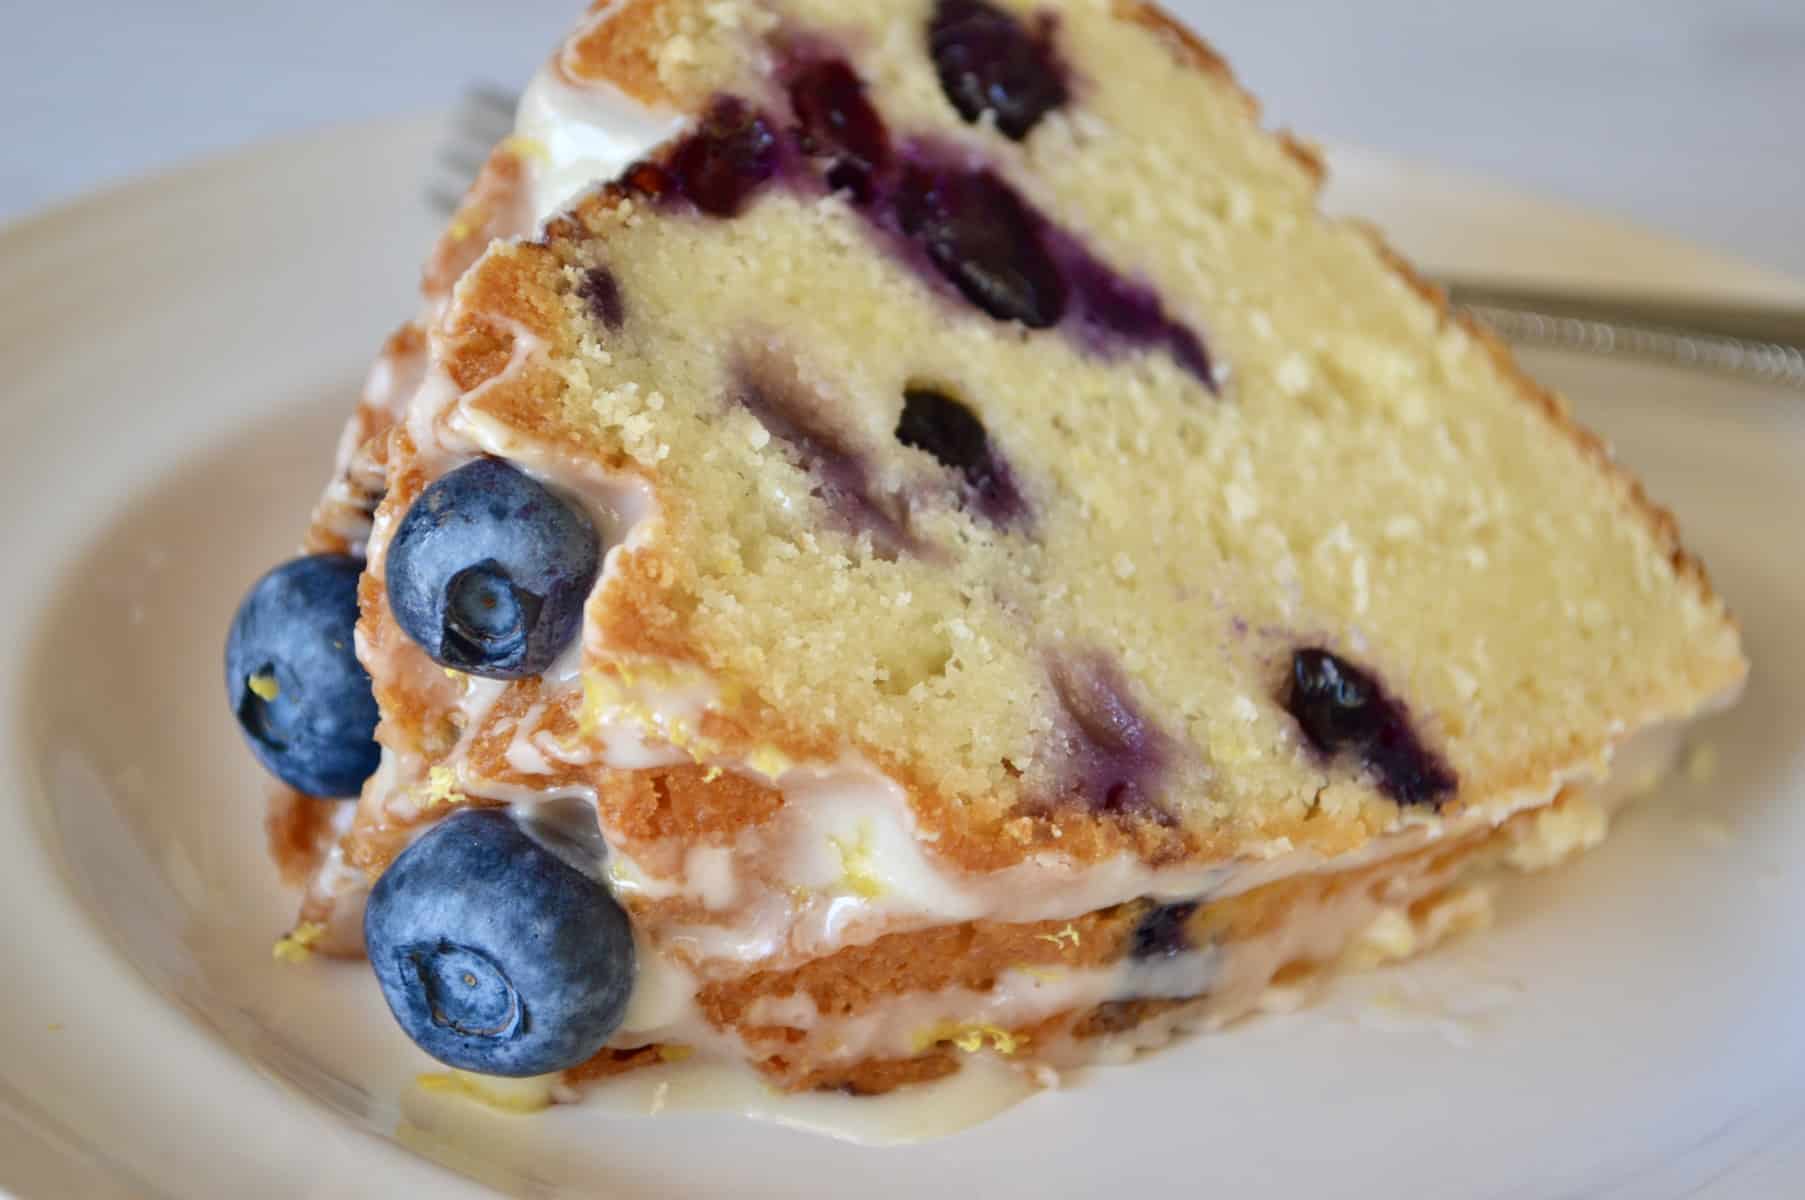 blueberry lemon bundt cake make in a jubilee cake pan from NordicWare